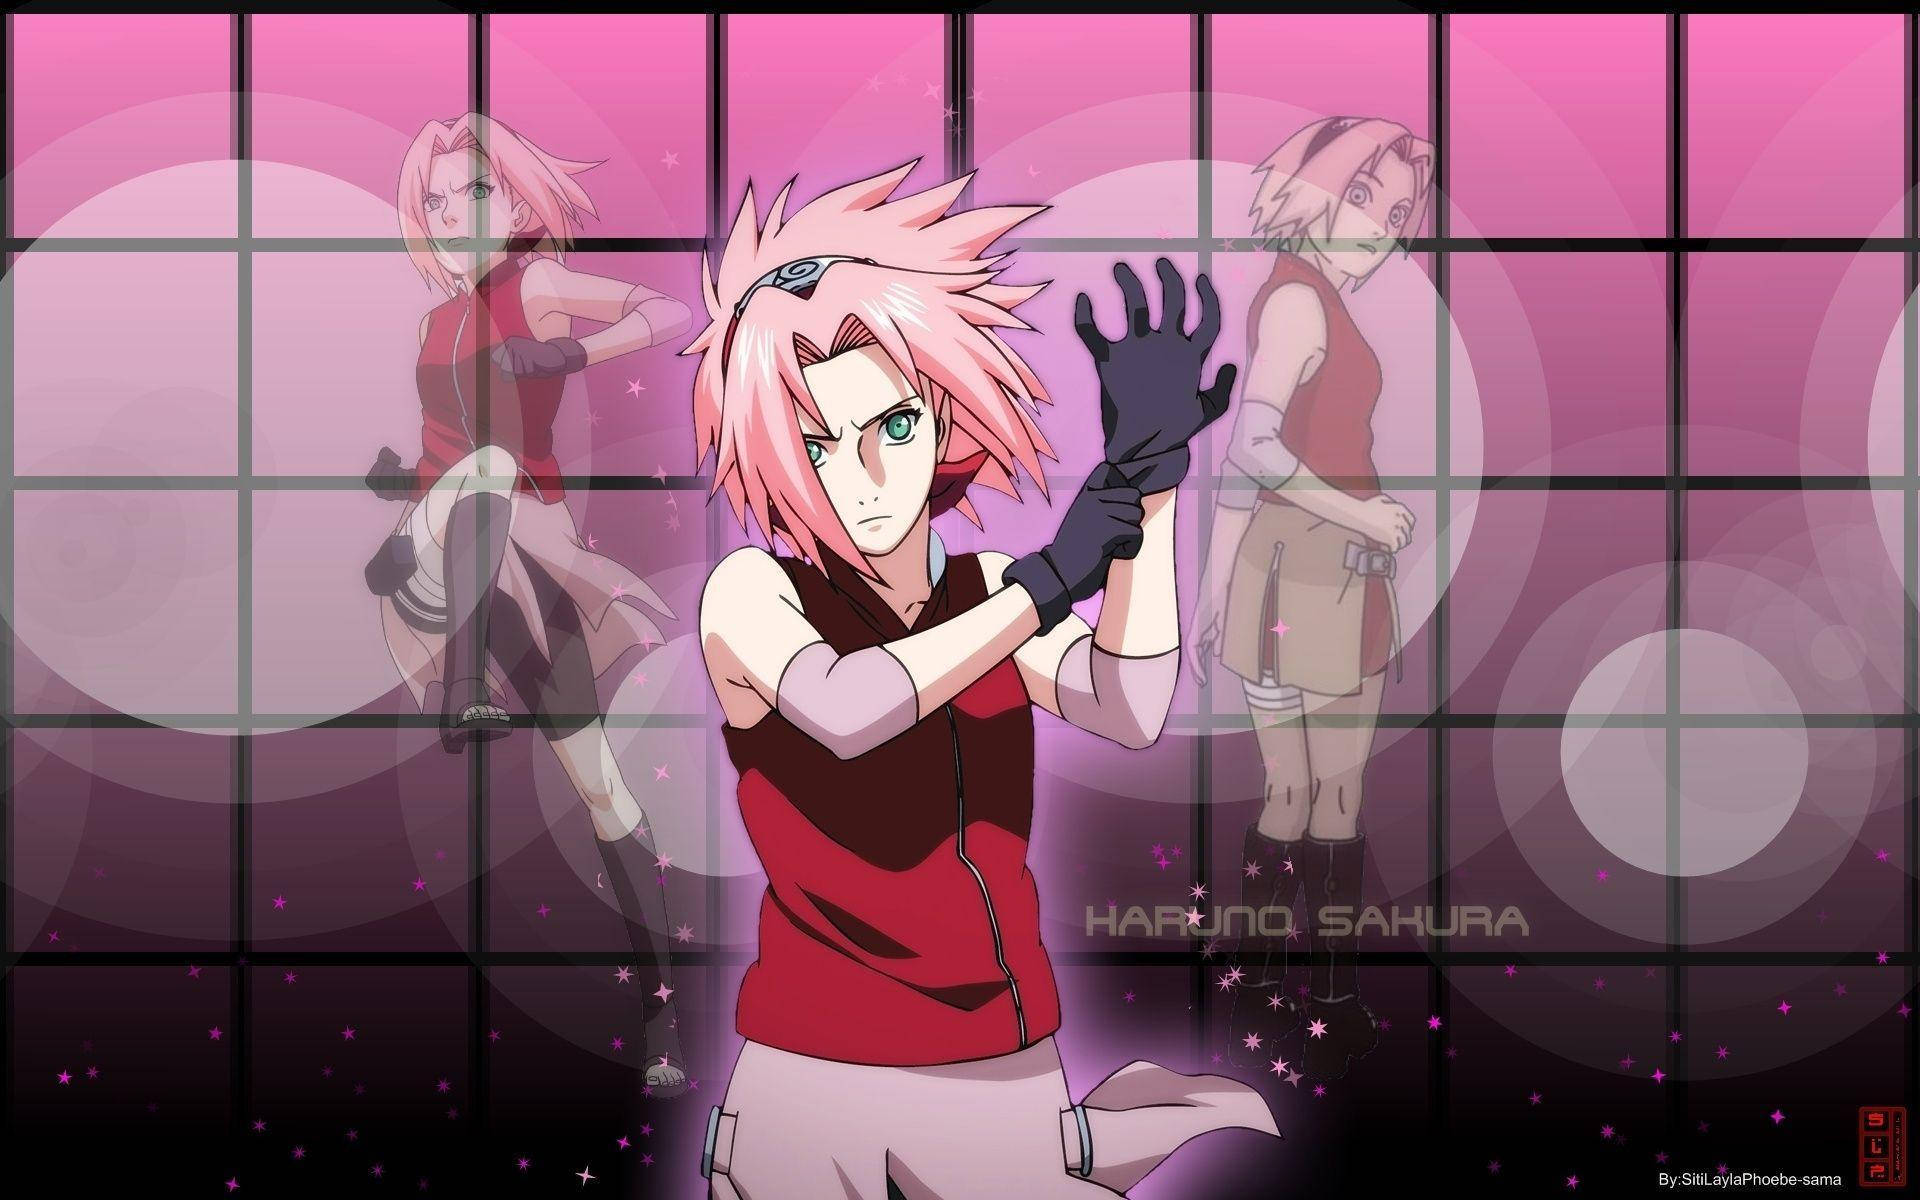 Lançamentos - Sakura Animes